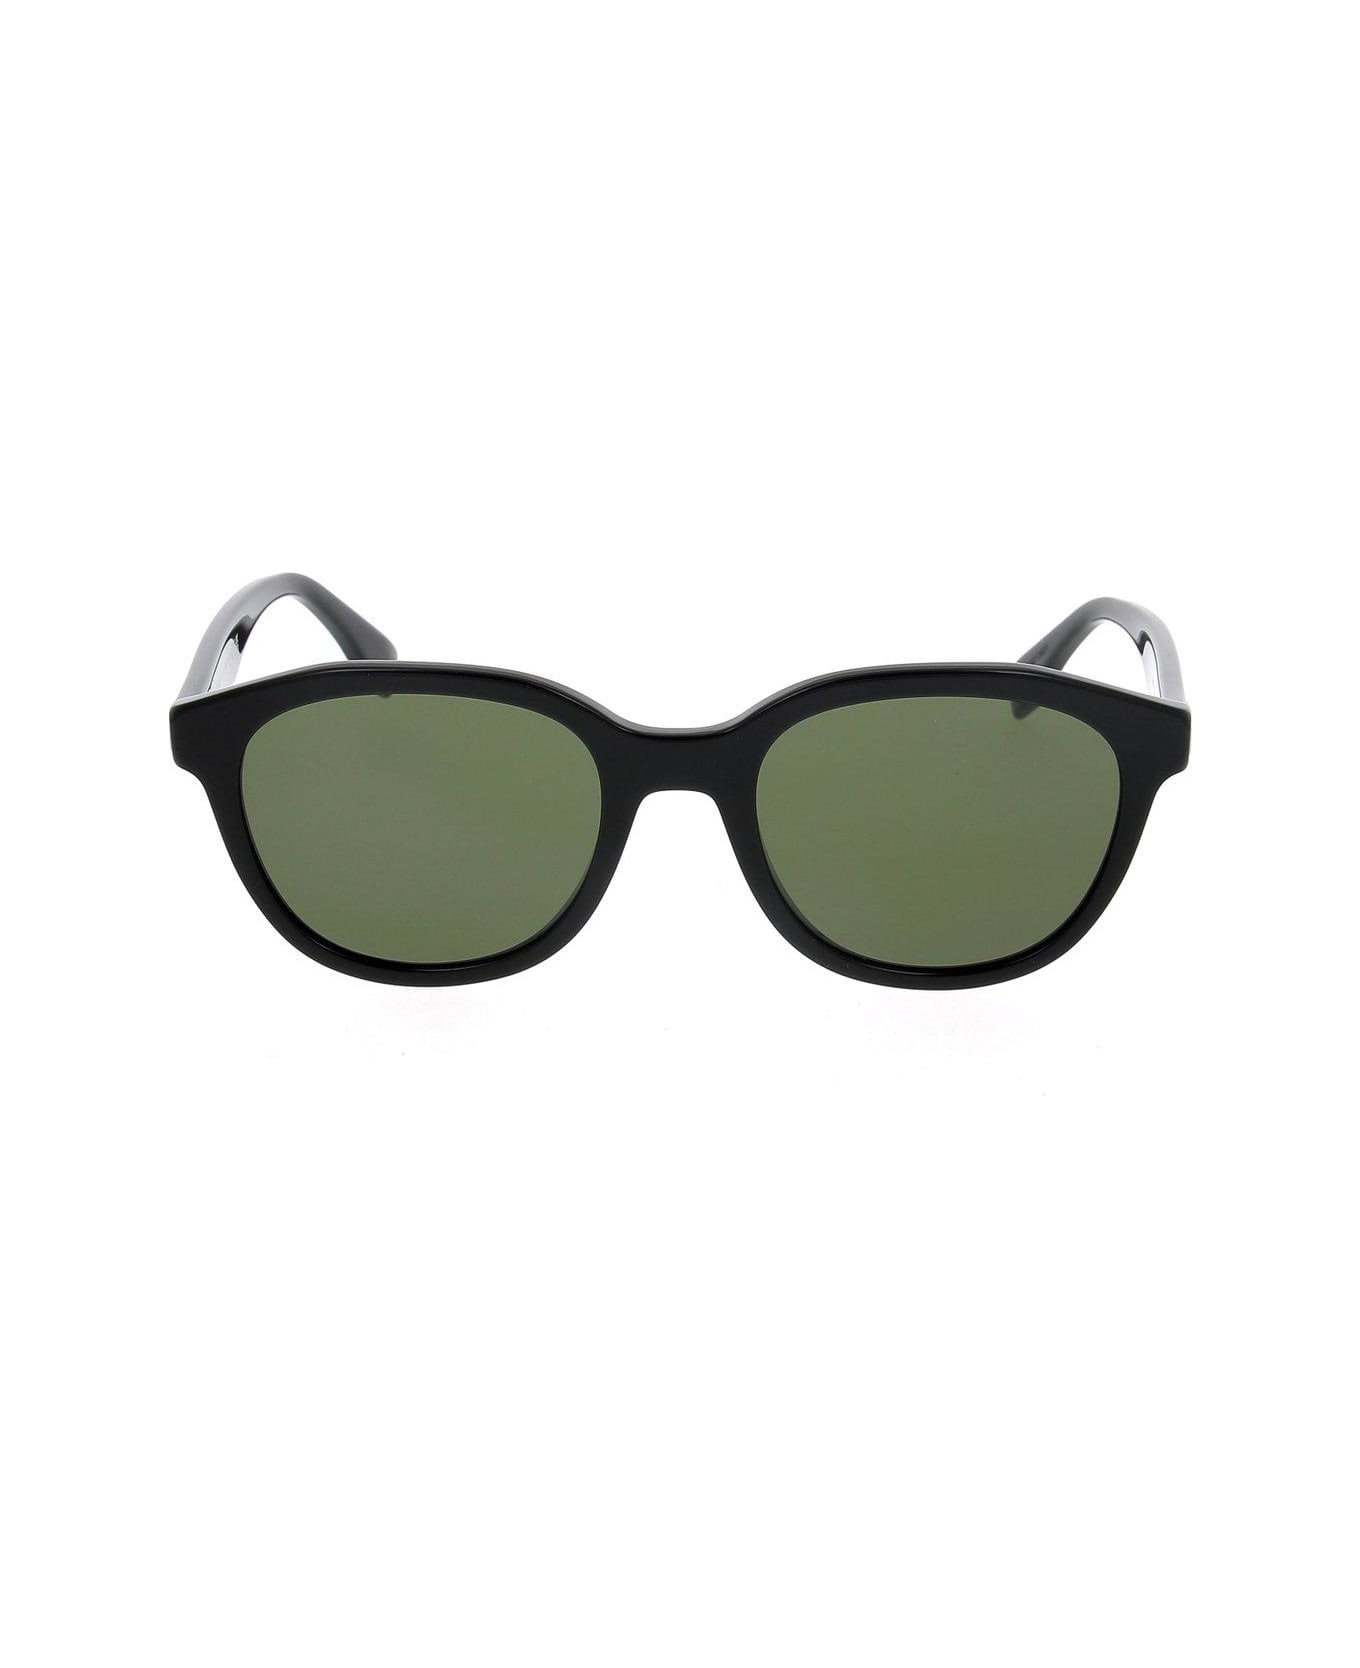 Fendi Eyewear Round Frame Sunglasses - 01n